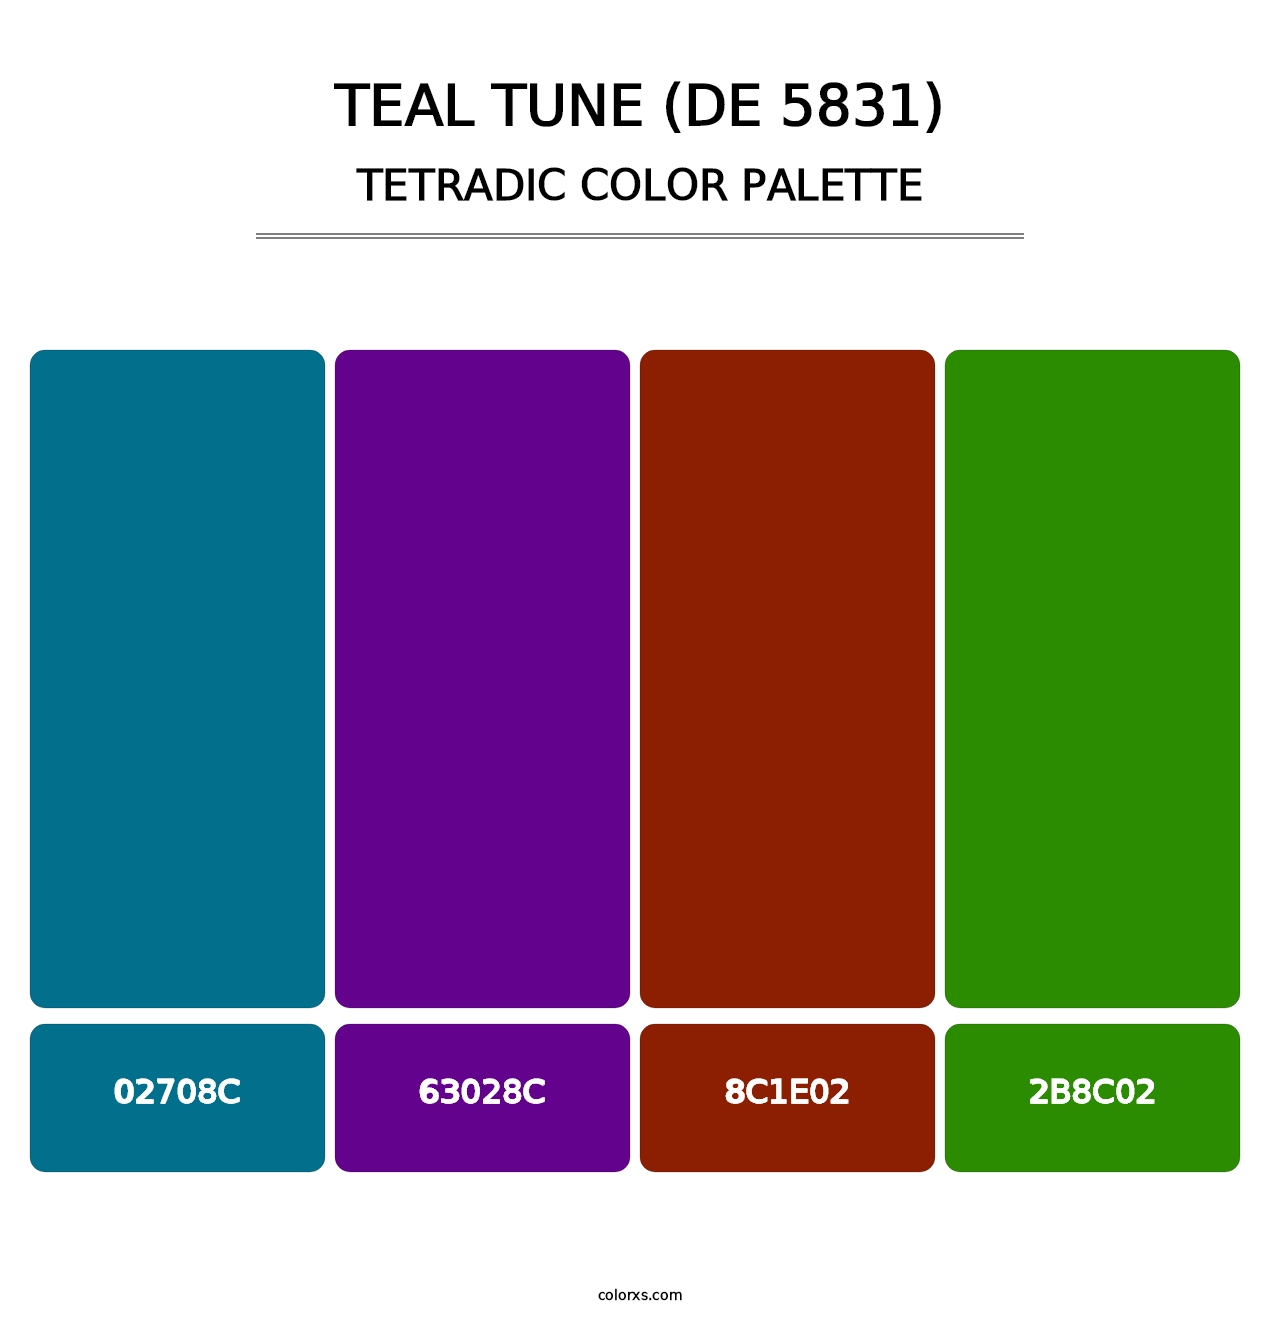 Teal Tune (DE 5831) - Tetradic Color Palette